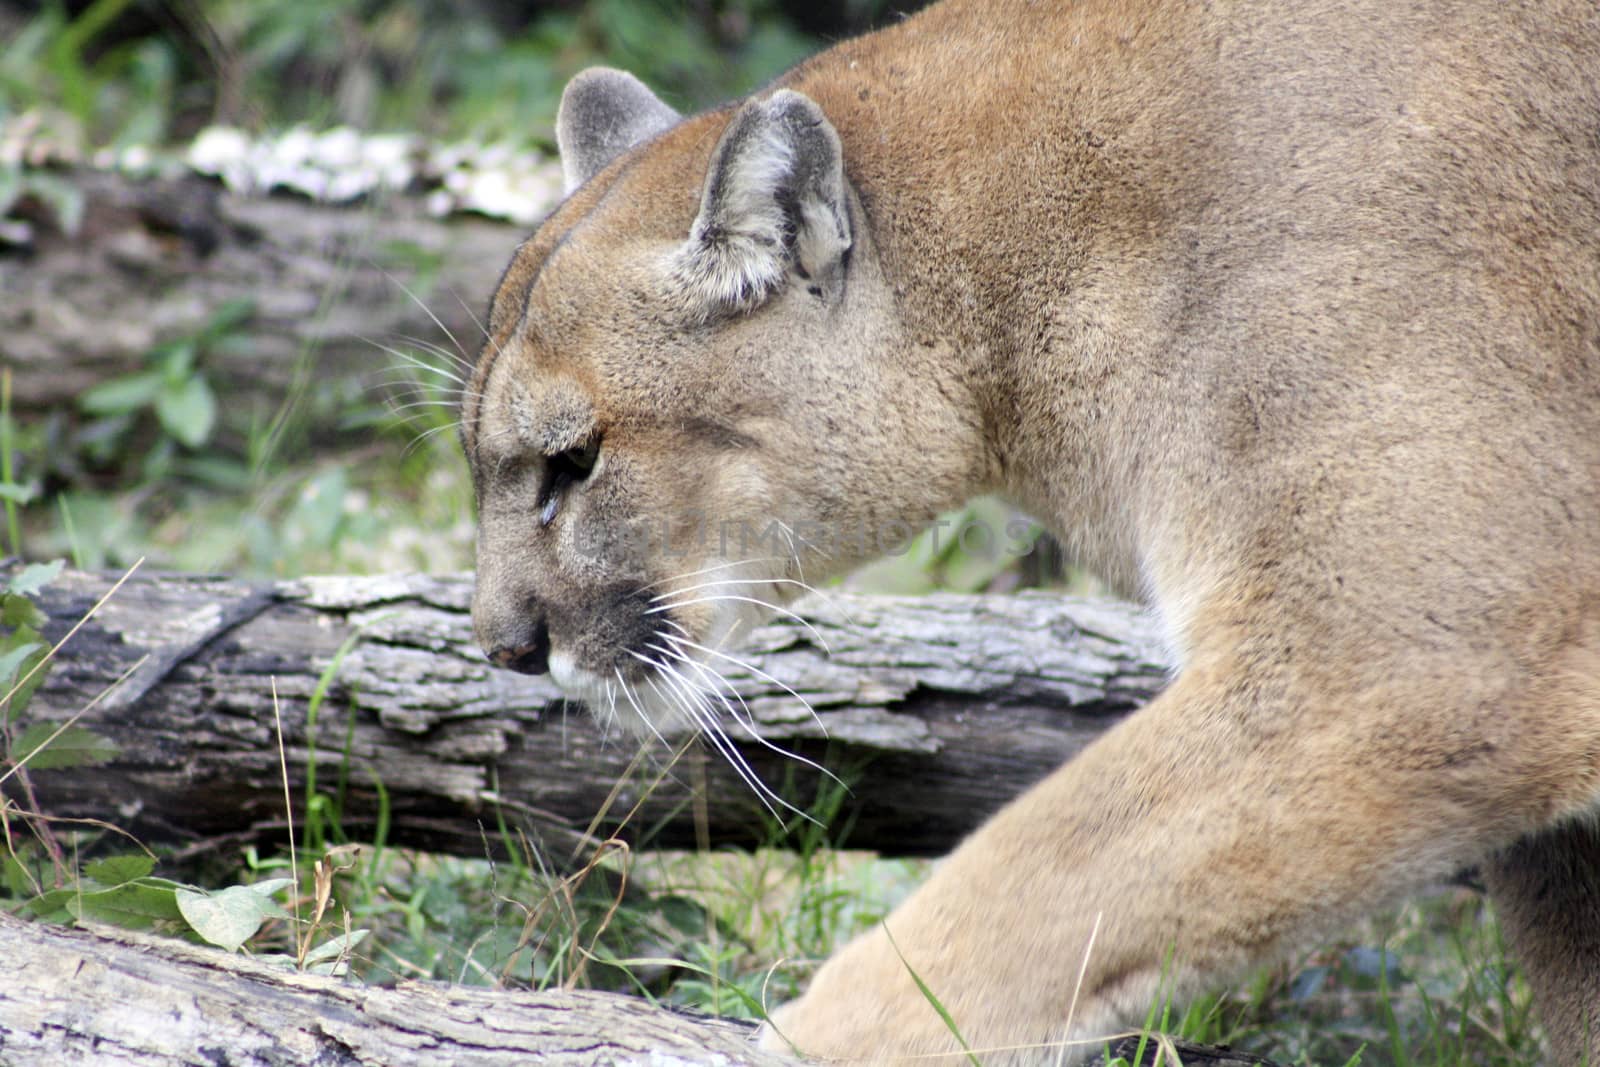 Closeup of profile as mountain lion walks through habitat